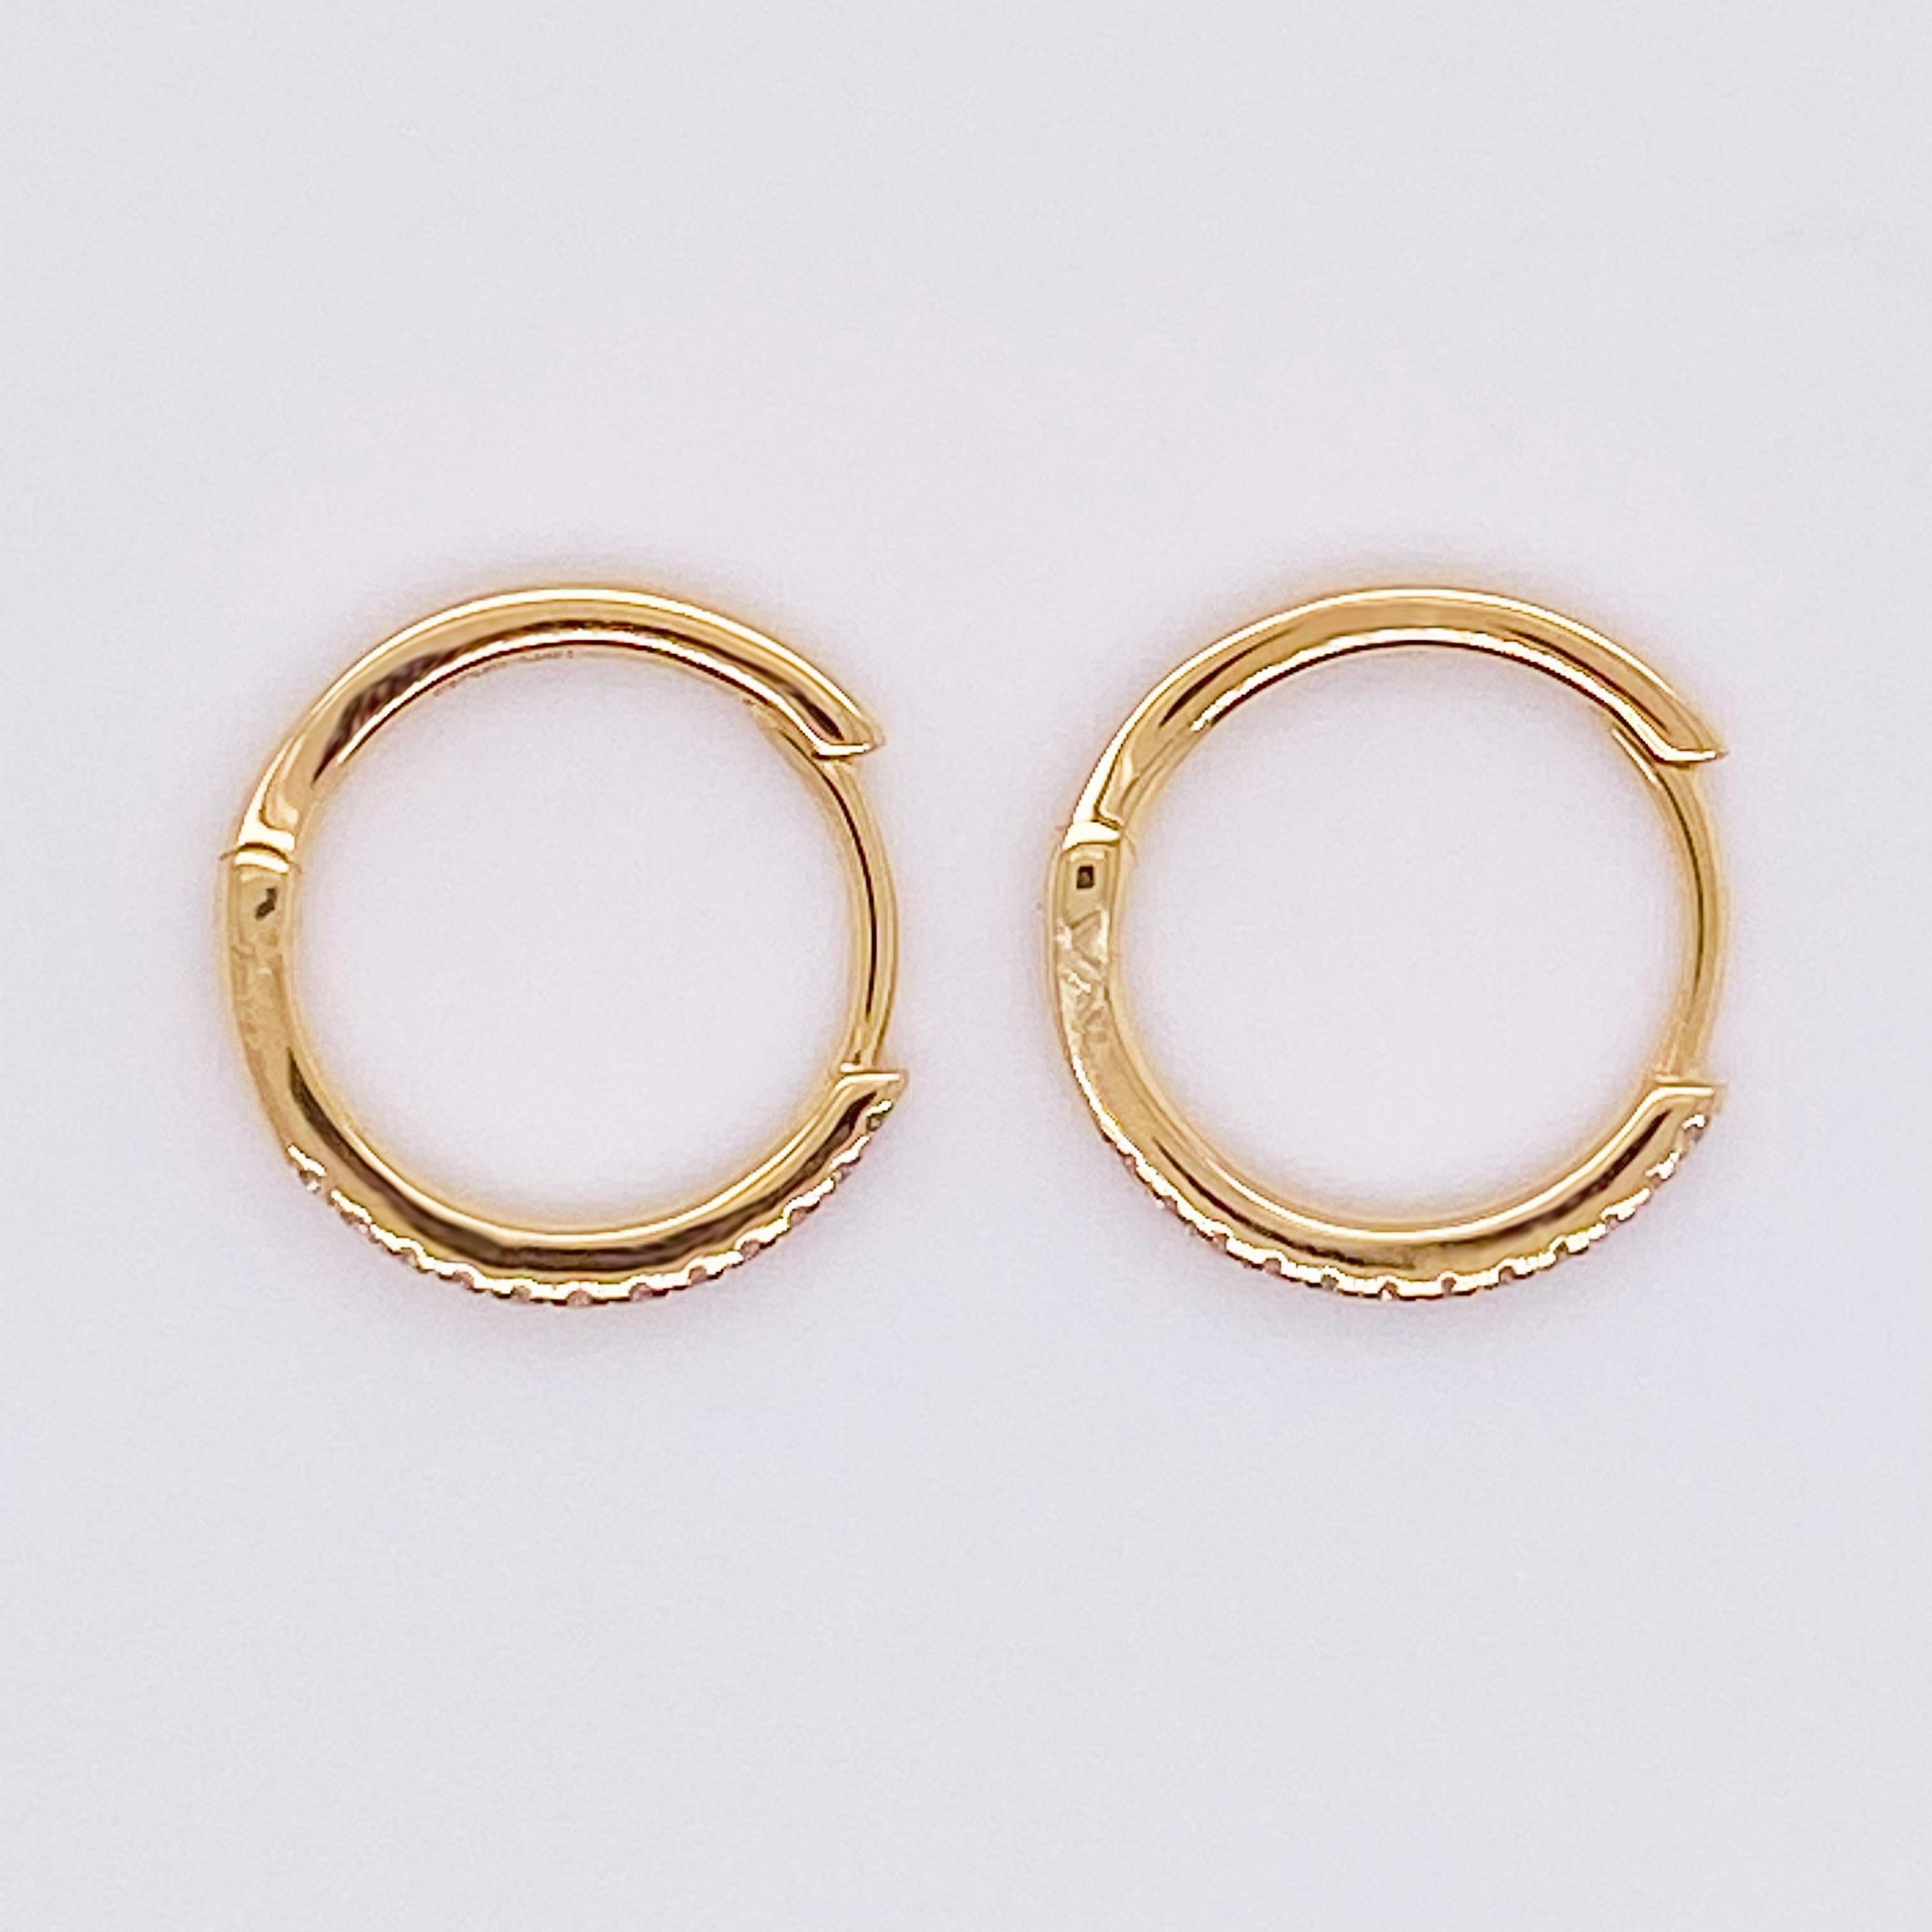 Round Cut Gold Diamond Hoop Earrings, Gold 18 Karat, 18 Karat, .10 Carat Diamond Huggies For Sale